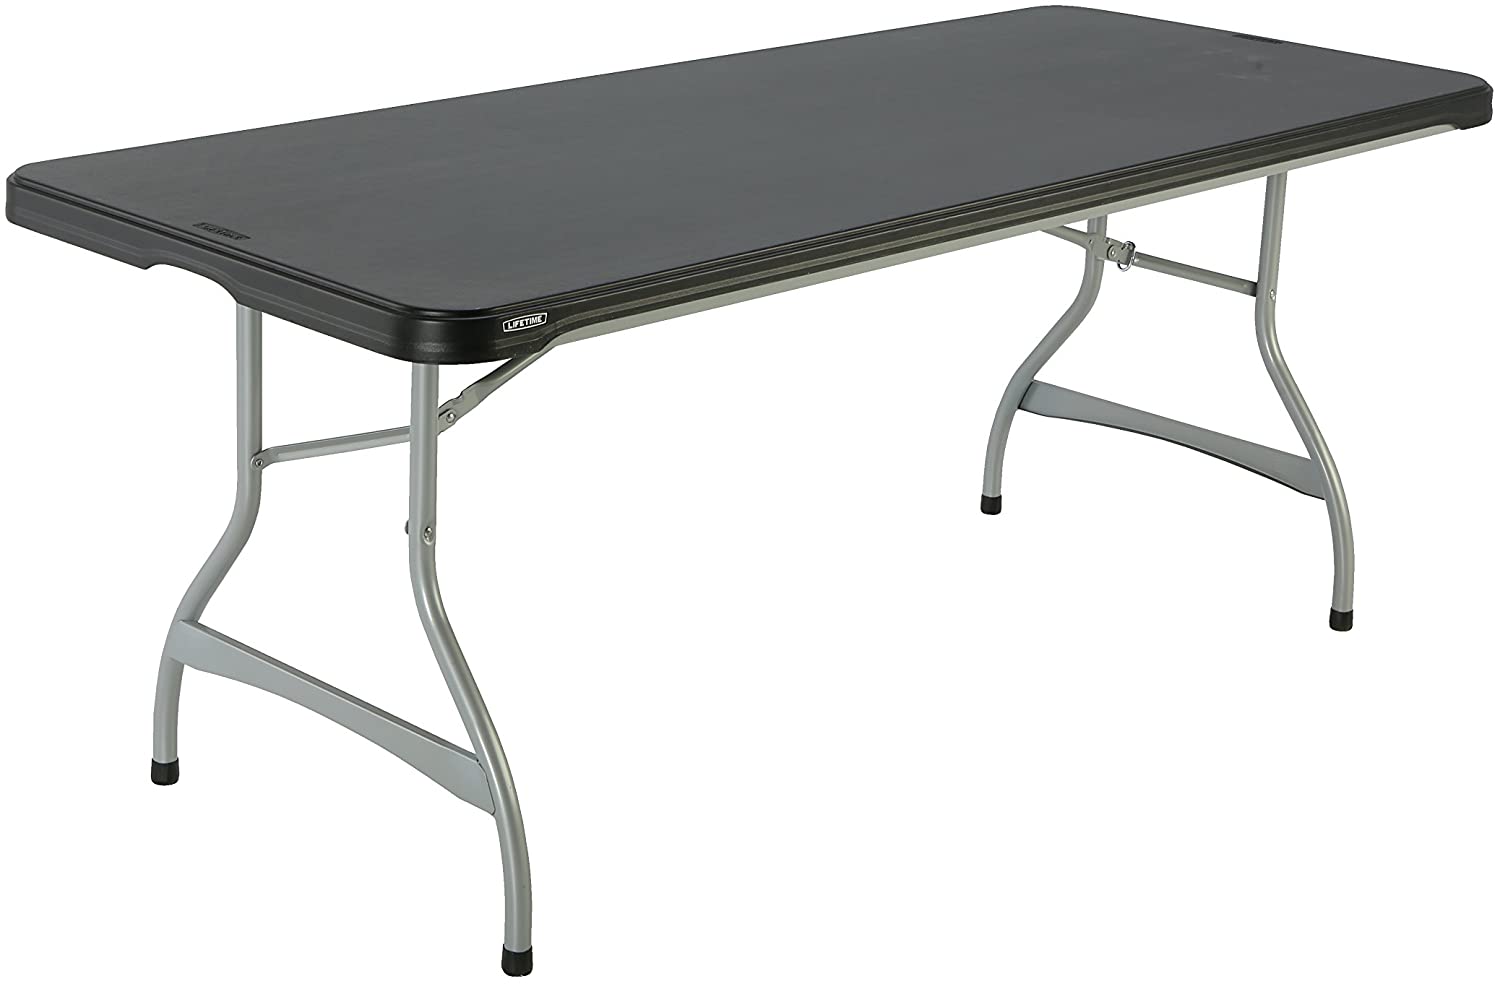 LIFETIME 280350 6FT FOLDING TABLE BLACK - Kasimex